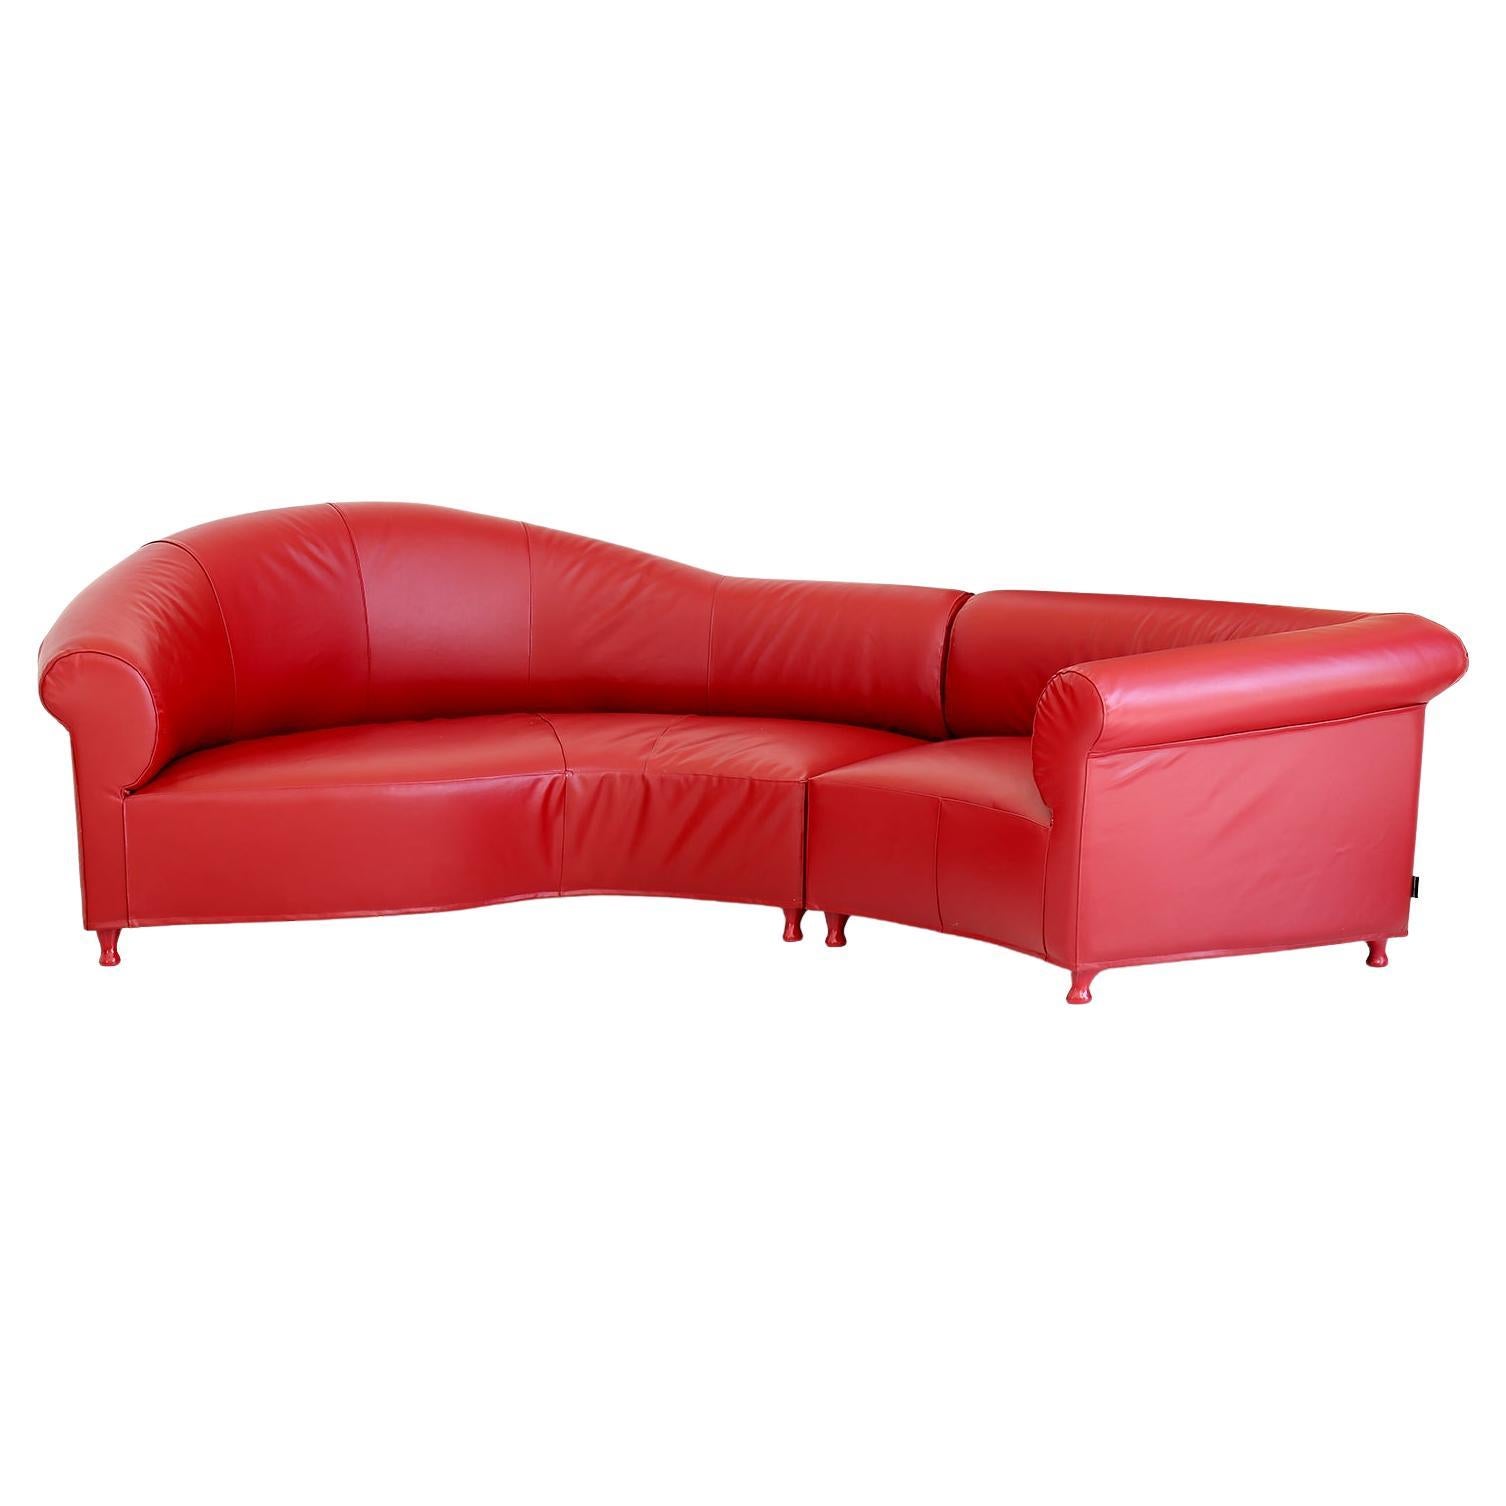 Giovannetti, 90s Contemporary Modular Leather Sofa by S. Giobbi, Red "Galassia"